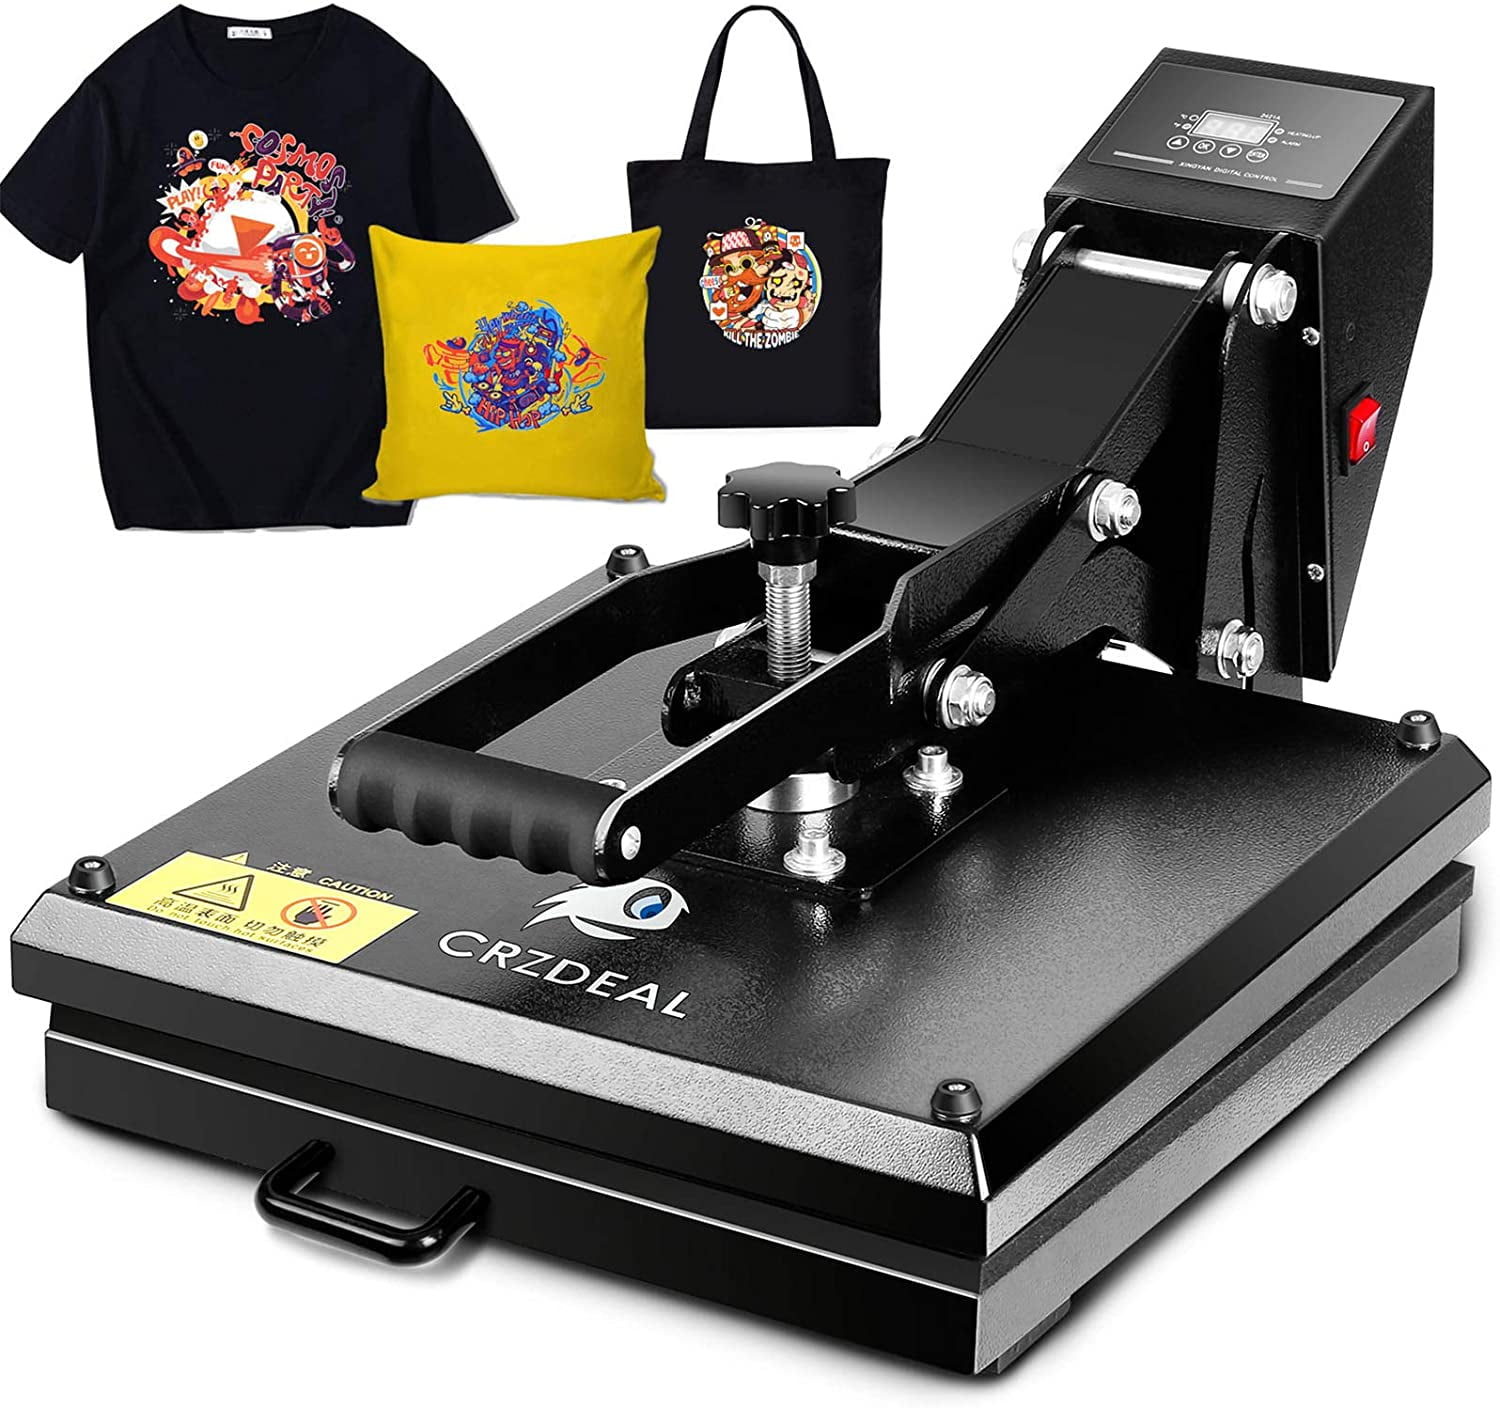 TUSY 15x15 Inch Heat Press Machine Digital Industrial Sublimation